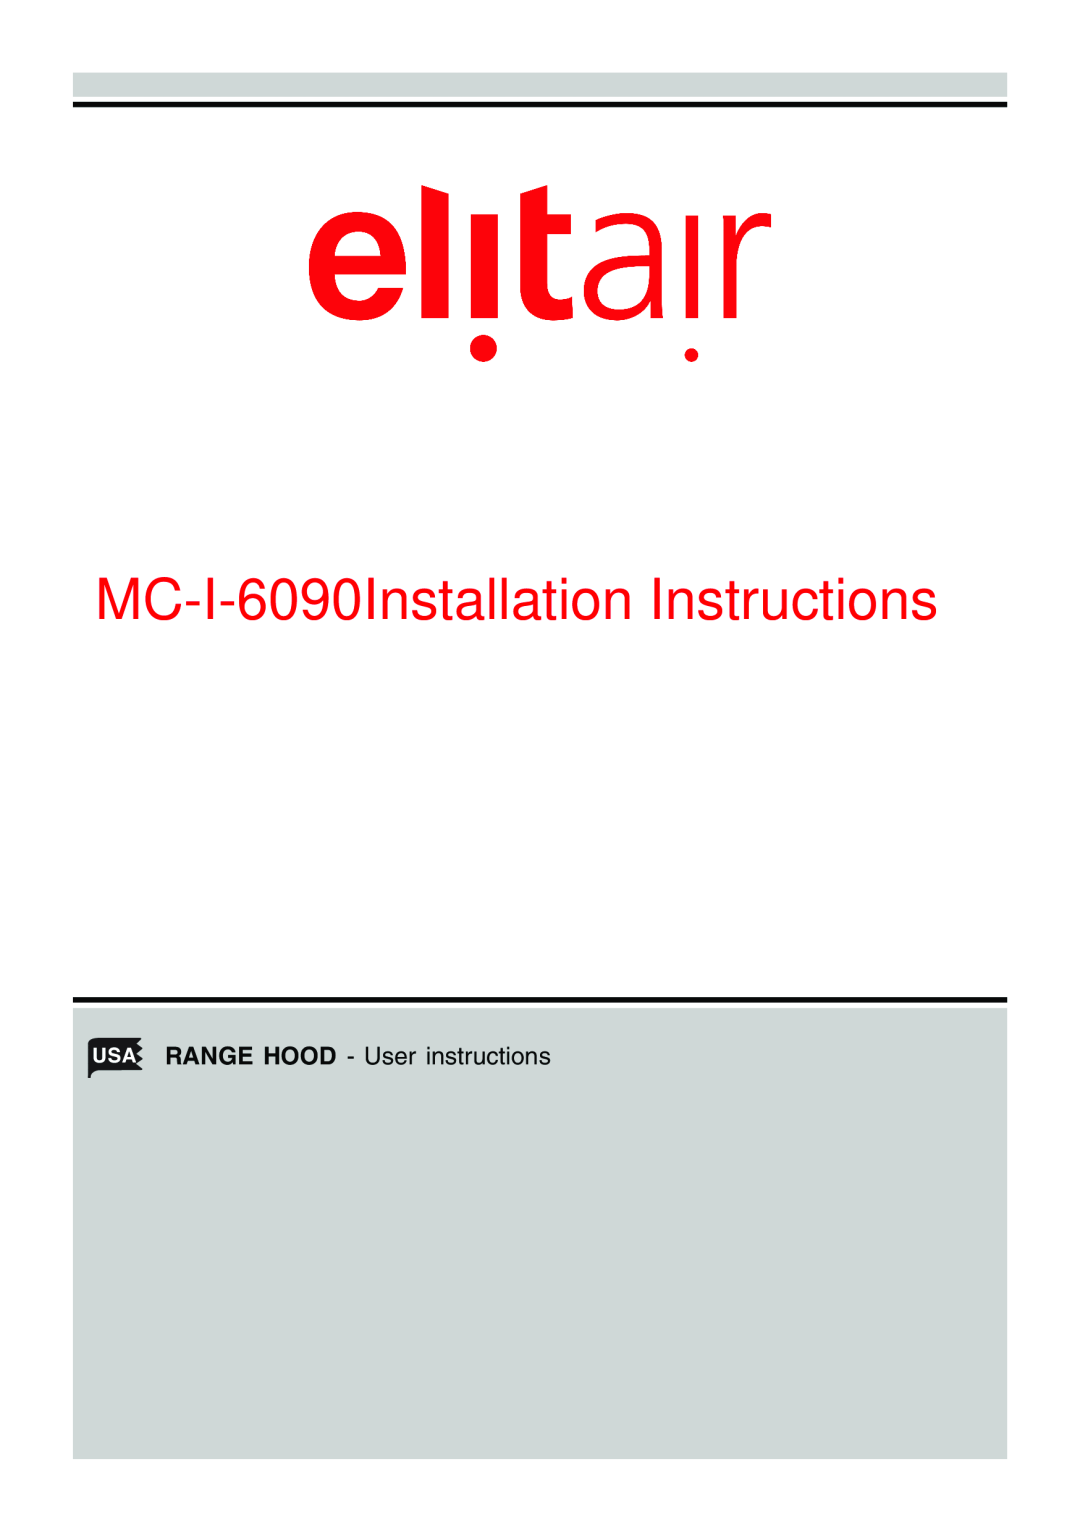 Elitair installation instructions MC-I-6090Installation Instructions, USA RANGE HOOD - User instructions 